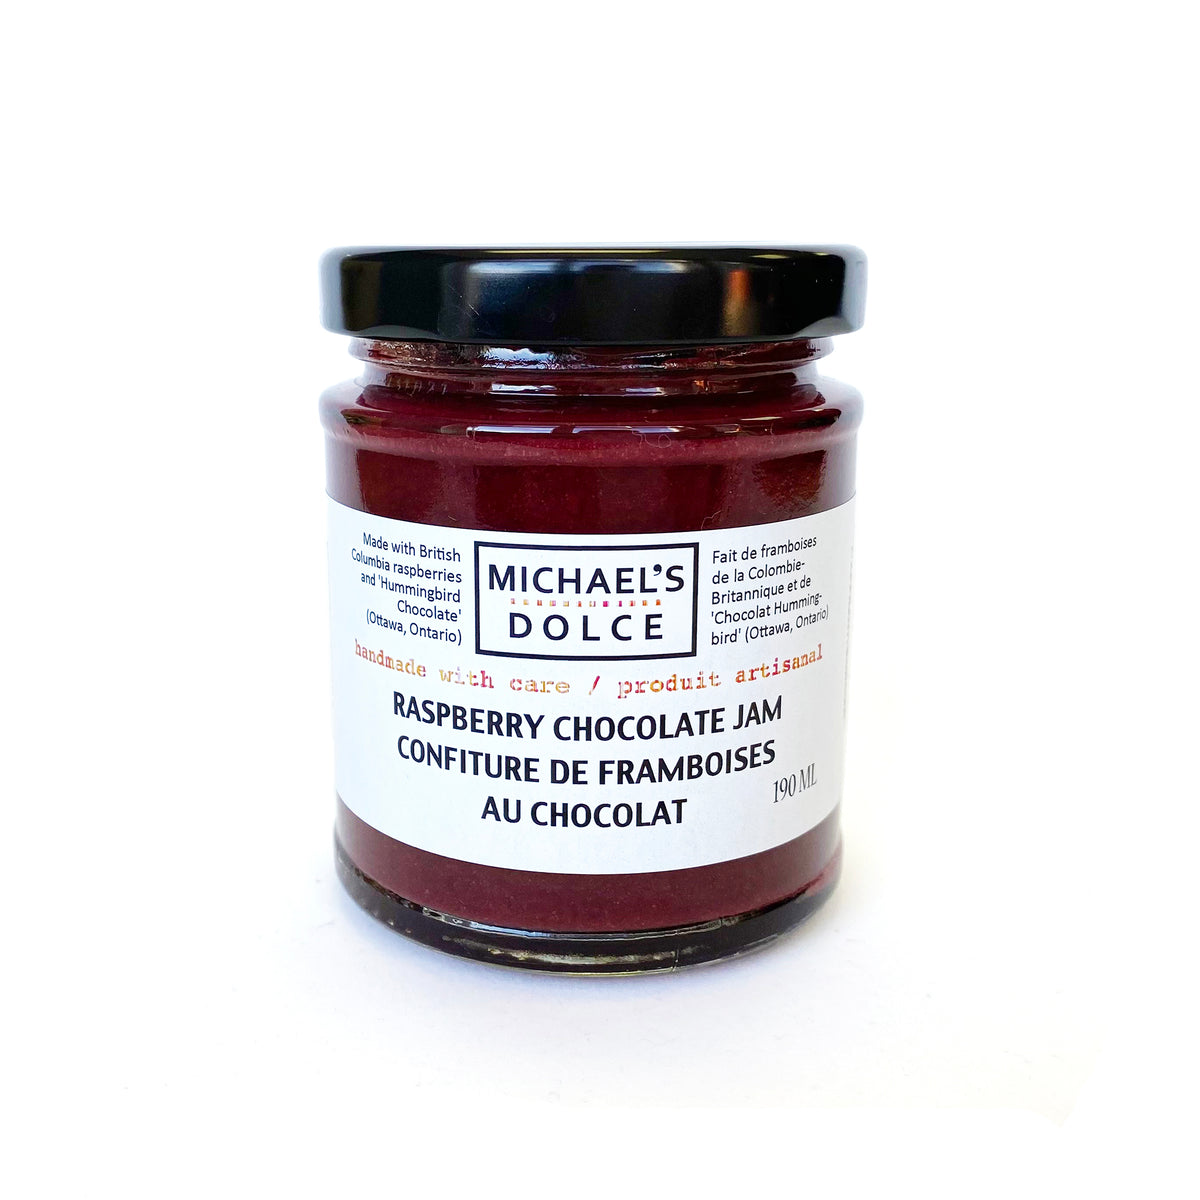 Michael's Dolce, Raspberry Chocolate Jam